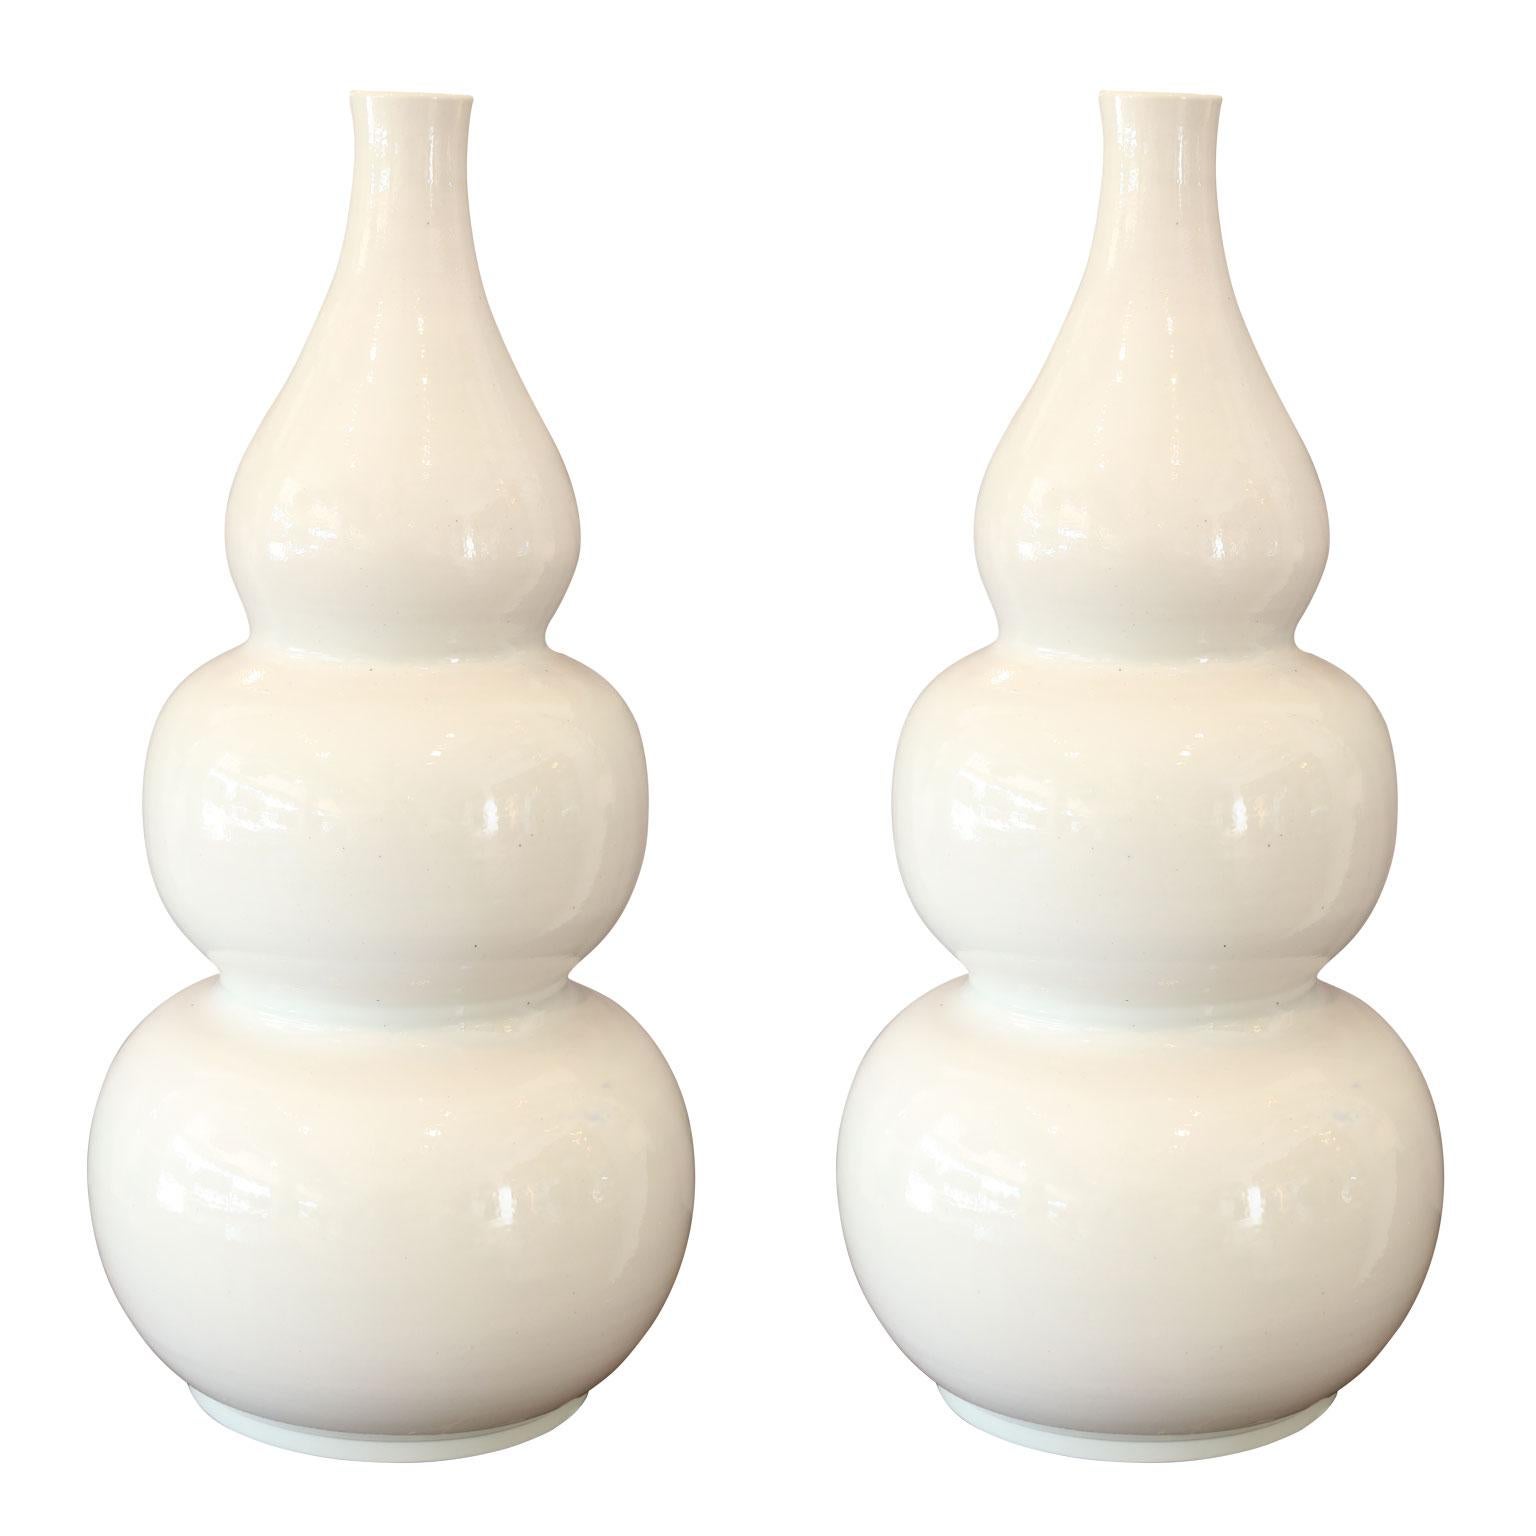 Two Substantial Vintage White Gourd-Shape Vases For Sale 1